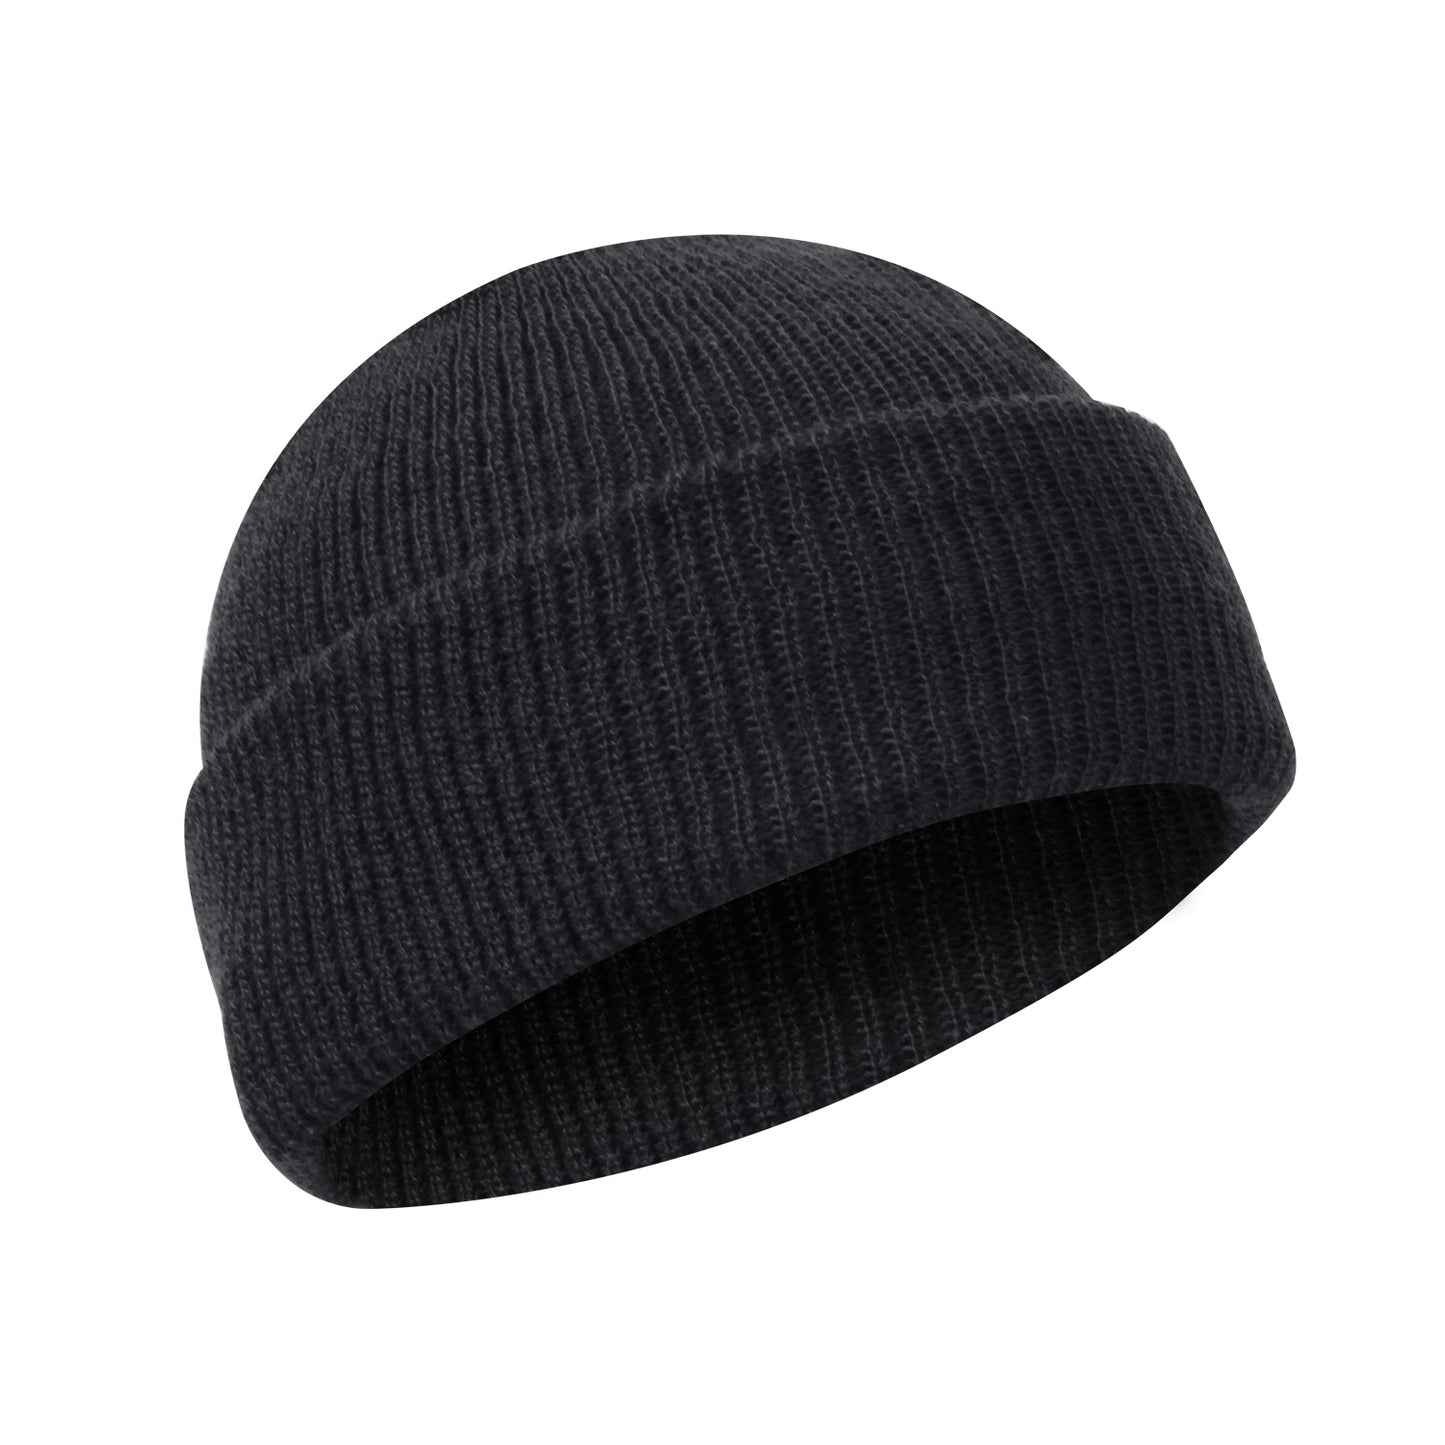 100% Wool Watch Cap Warm GI Cold Winter Weather Snow Ski Hat USA Made